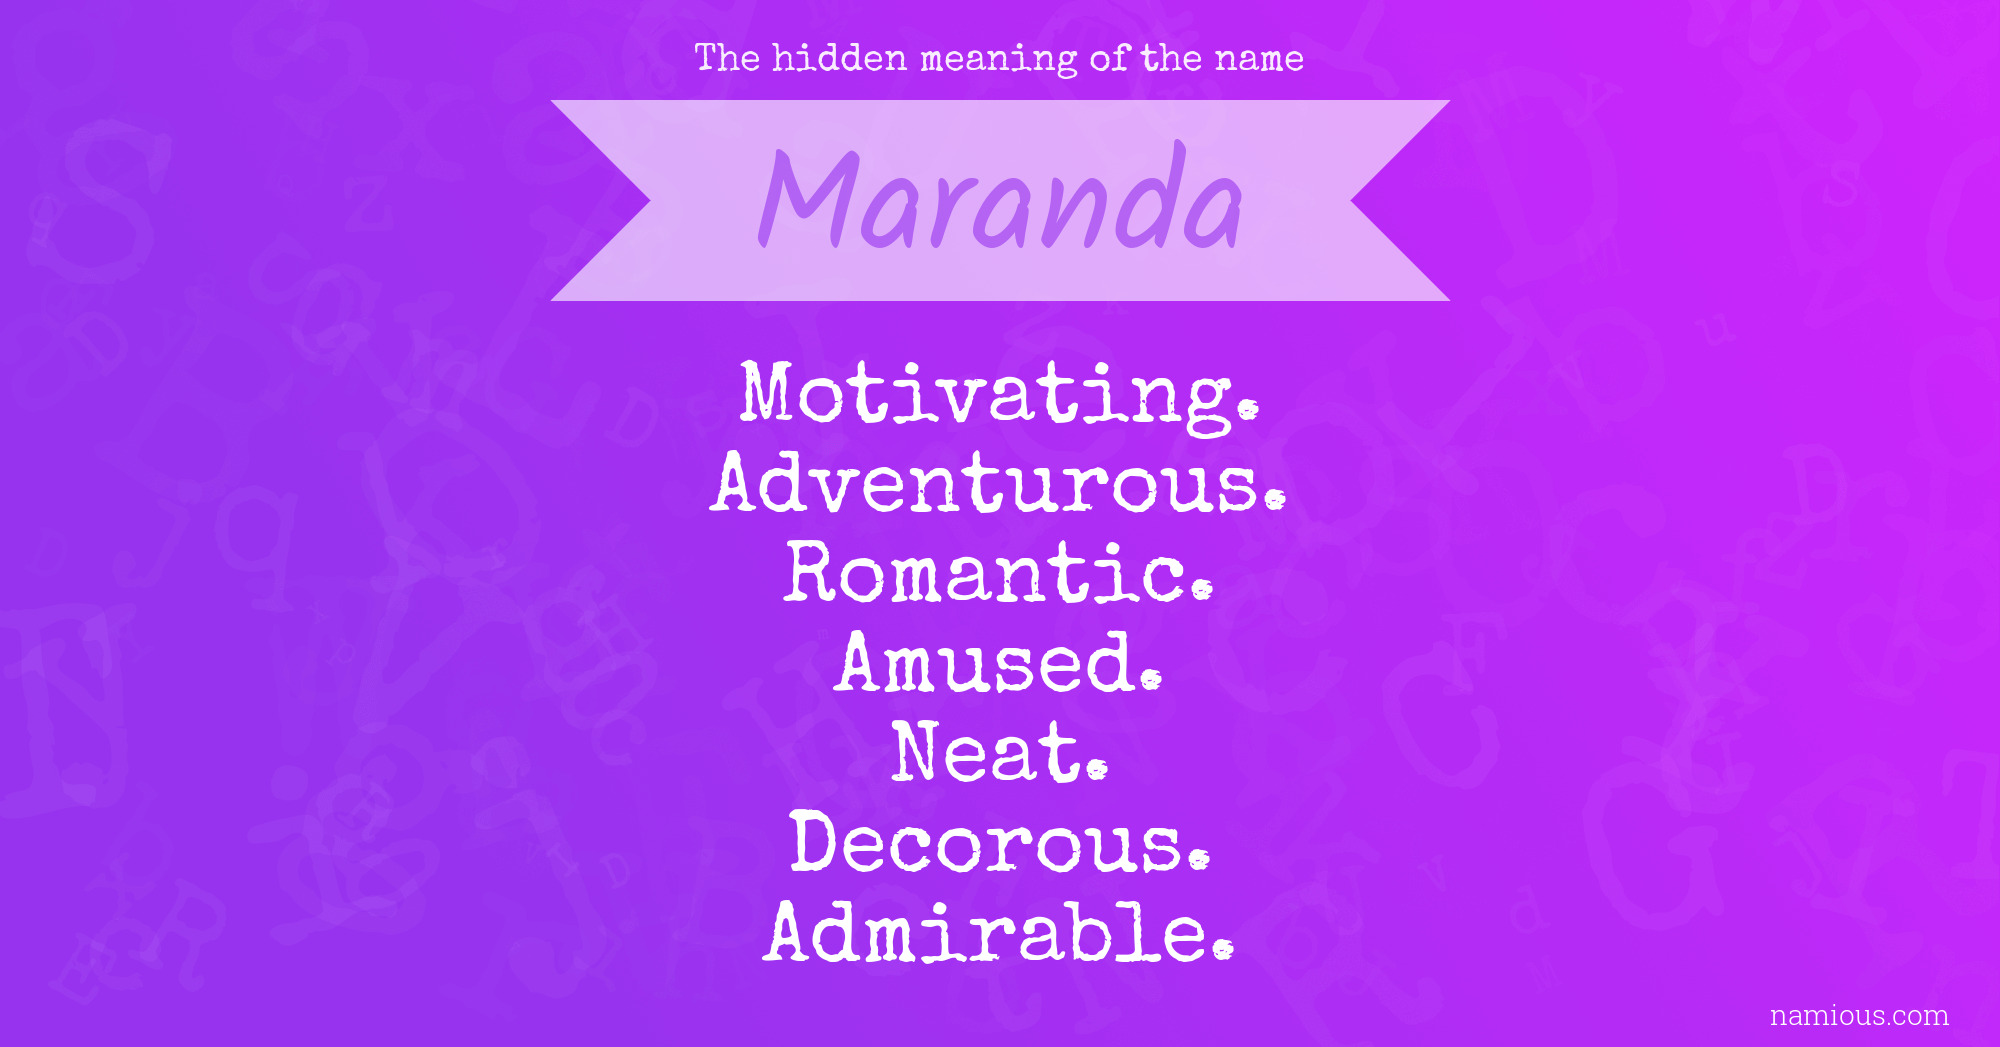 The hidden meaning of the name Maranda